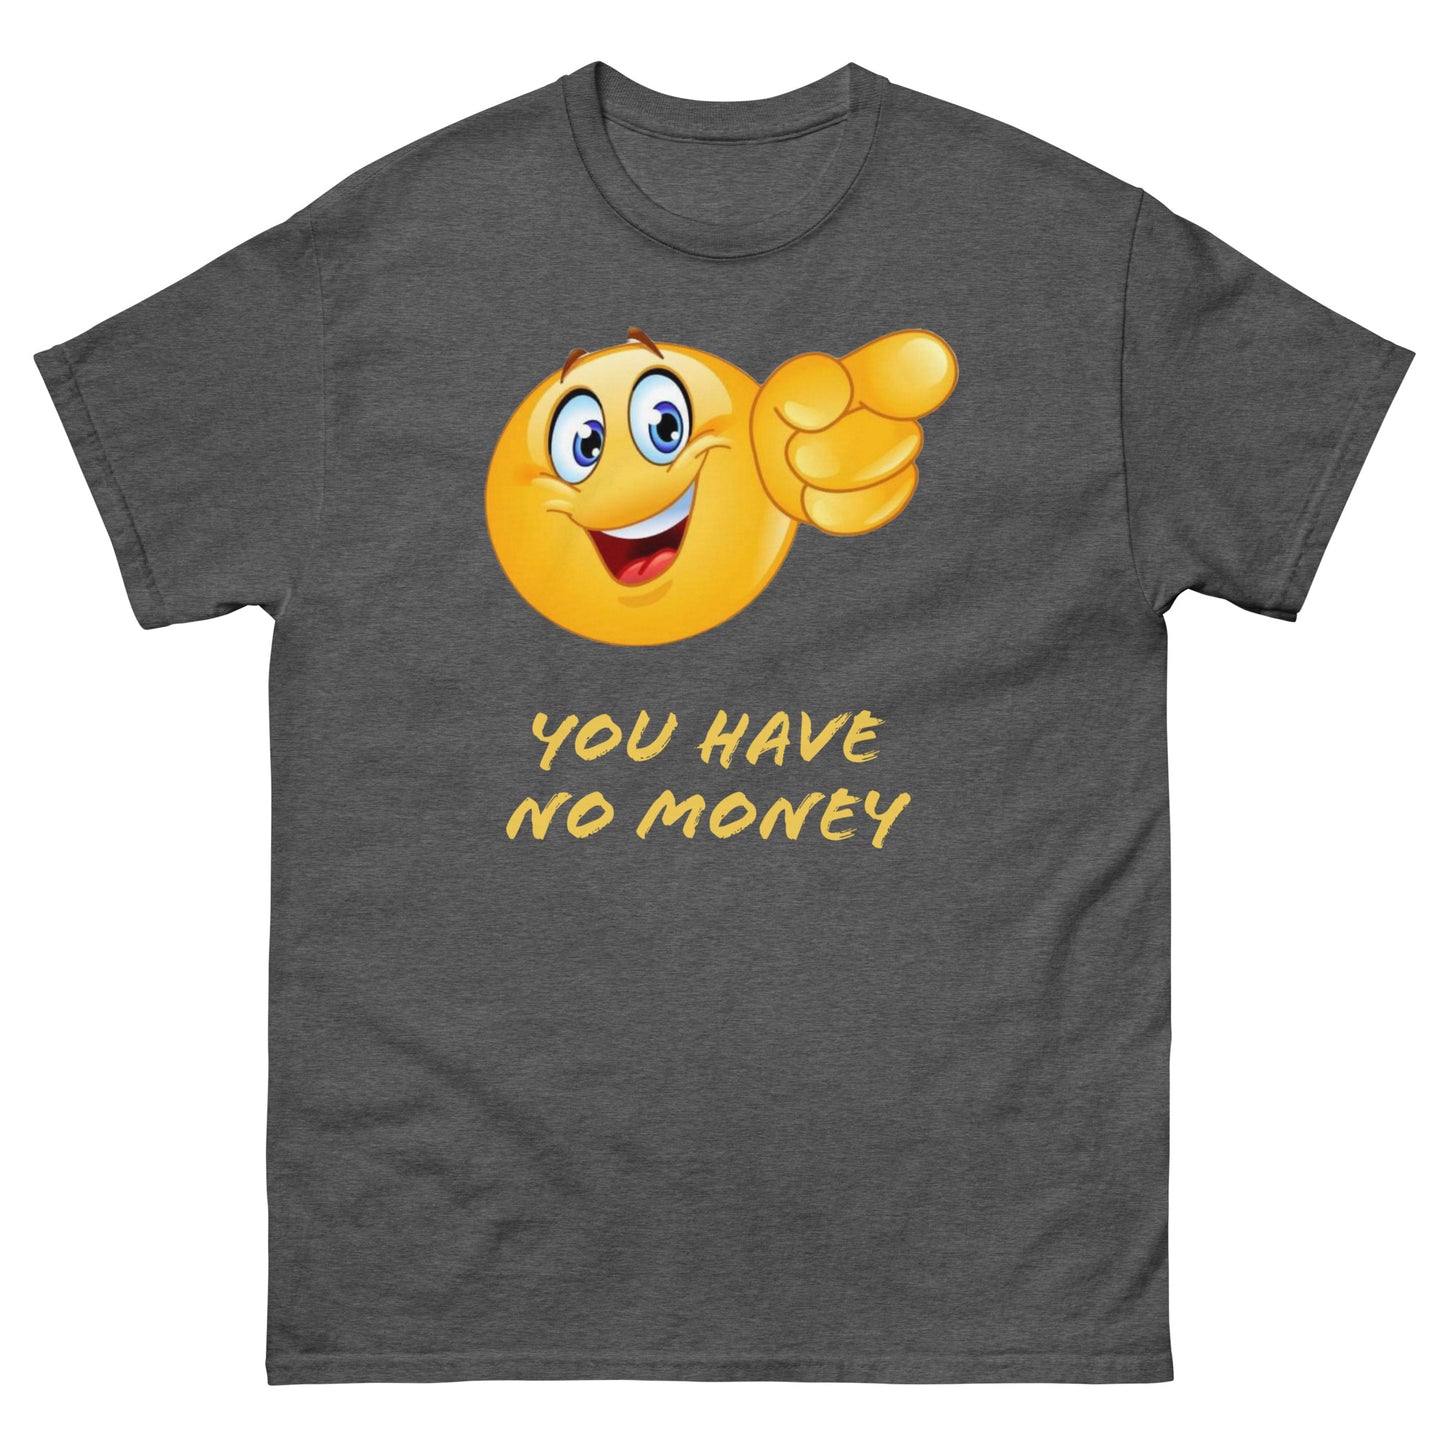 You have no money